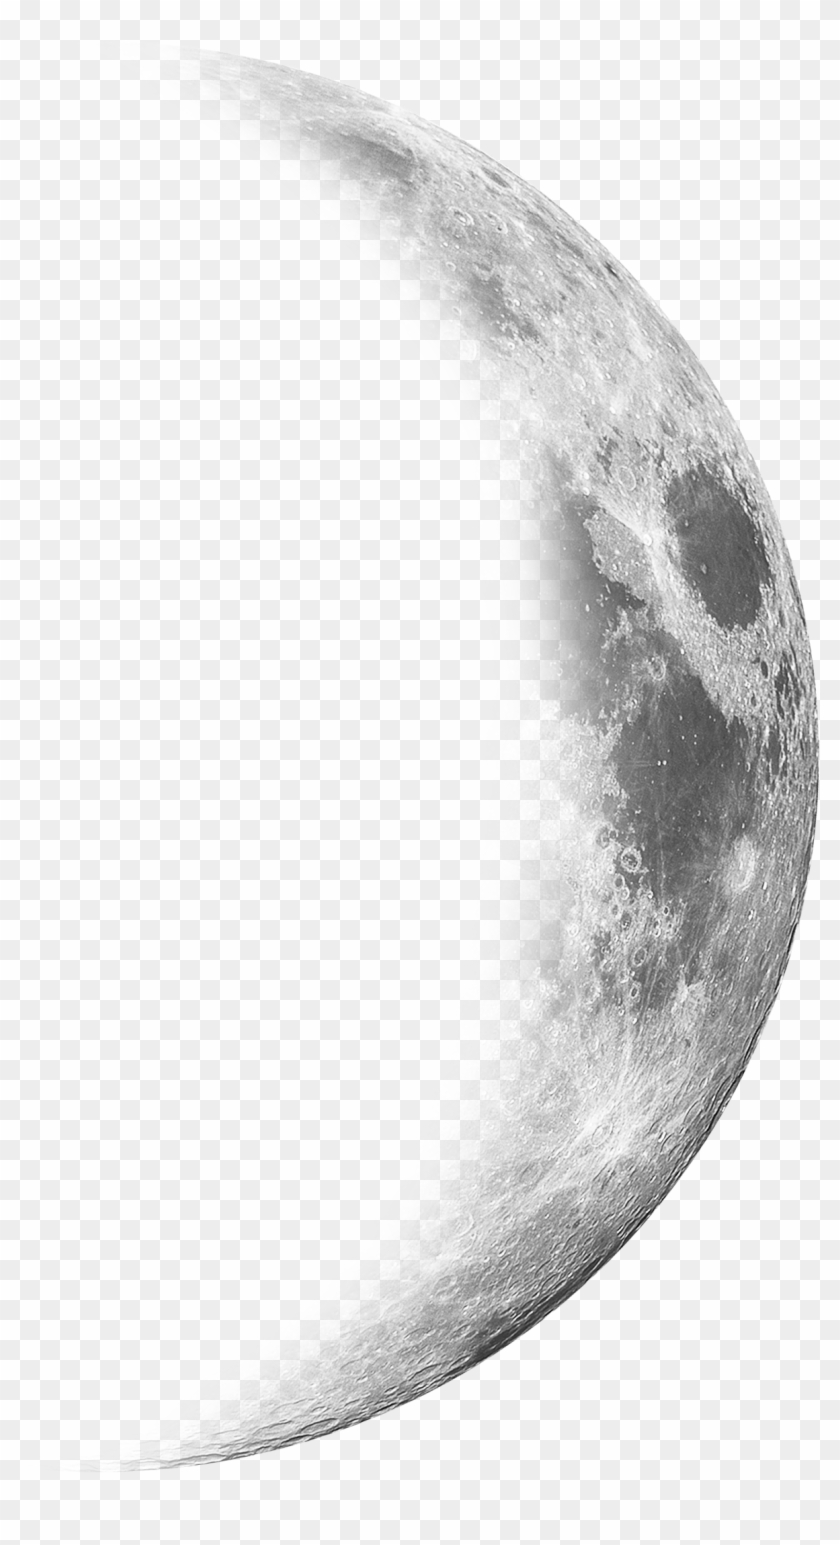 Waning Moon - Full Moon Clipart #2694352